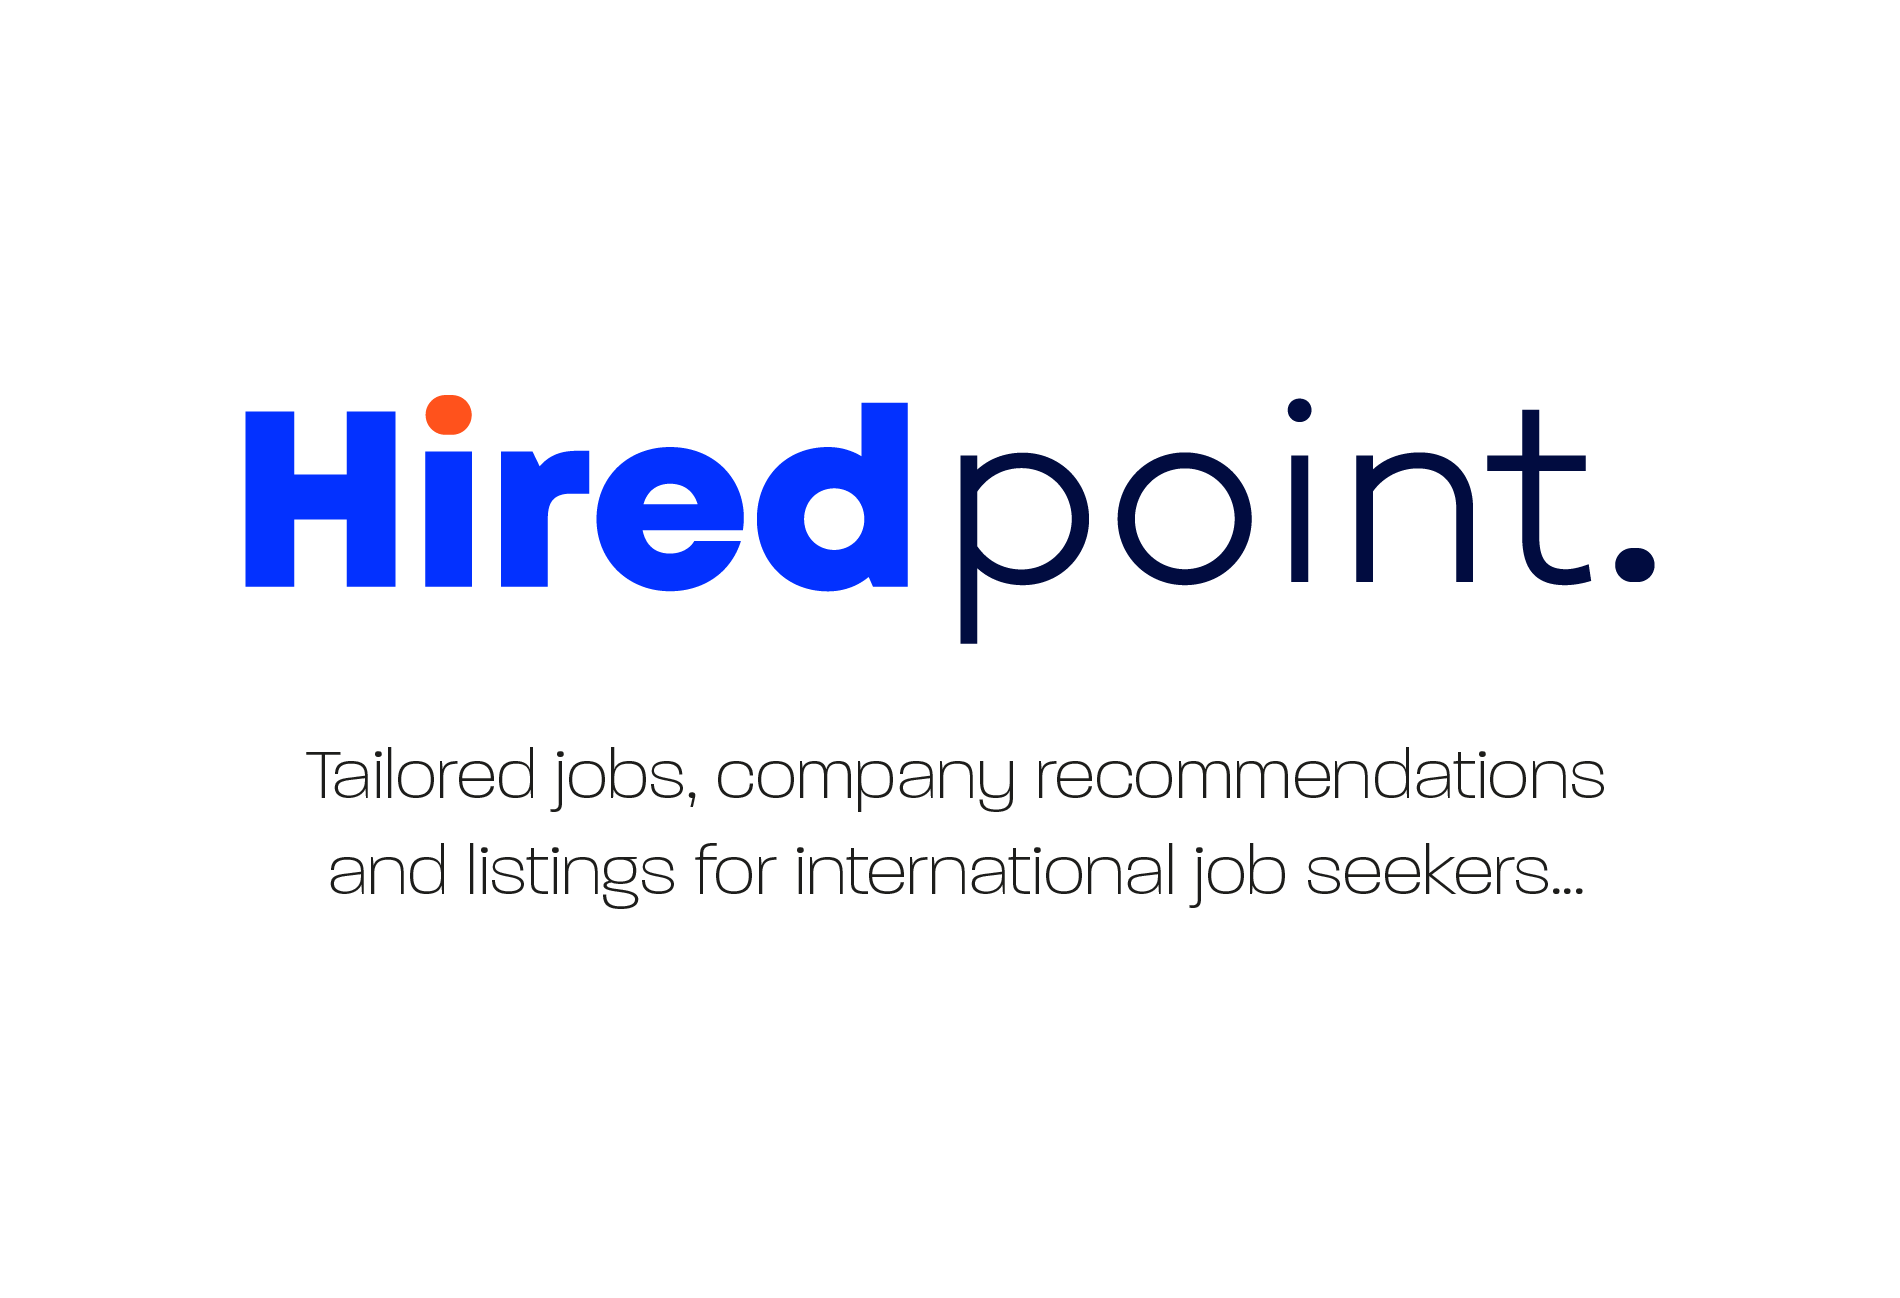 HiredPoint Logo and Strapline